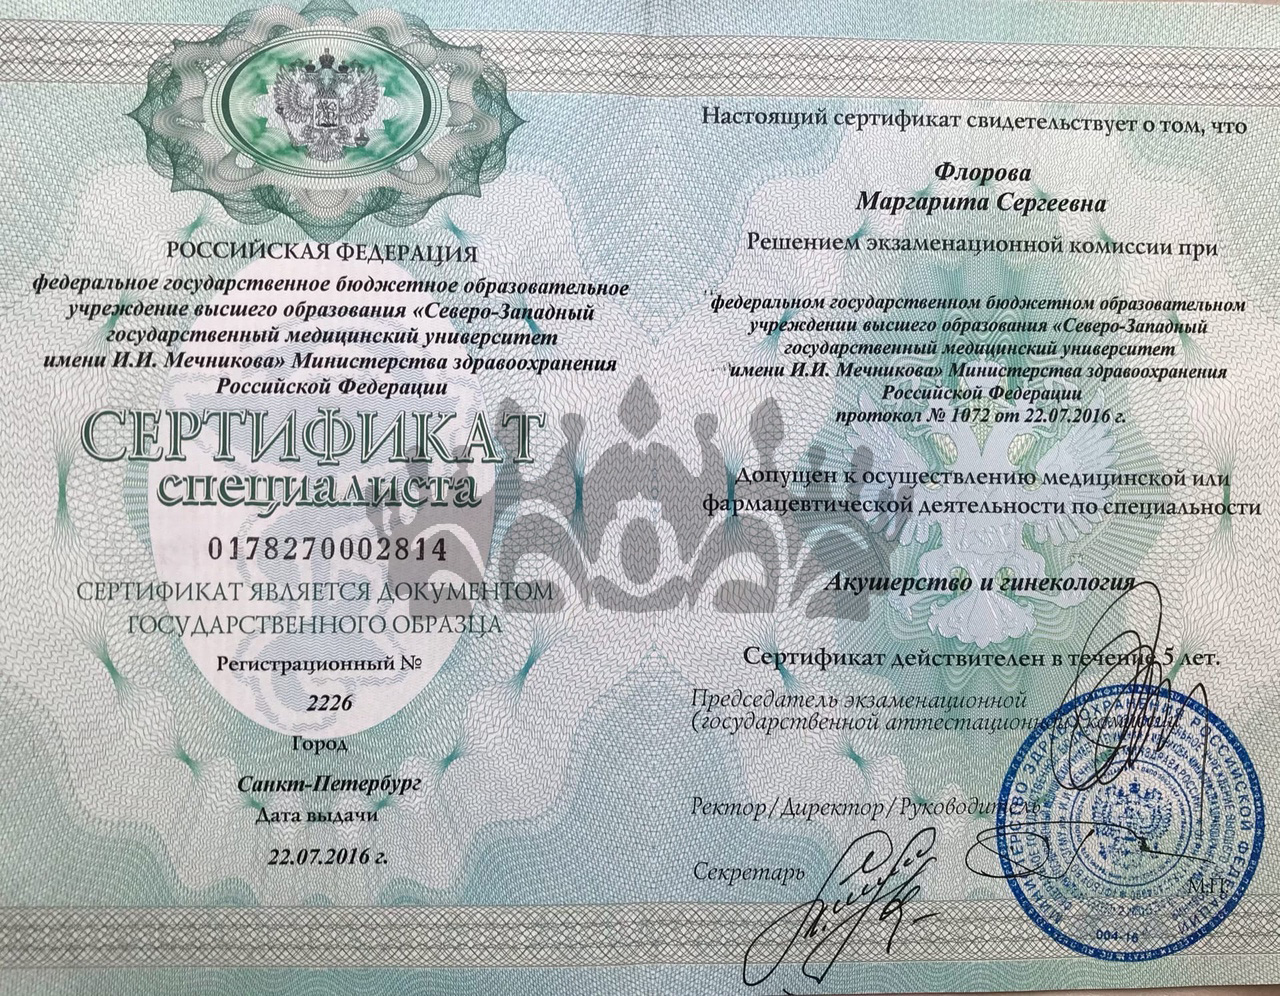 Сертификат Флорова М.С. - Акушерство и гинекология